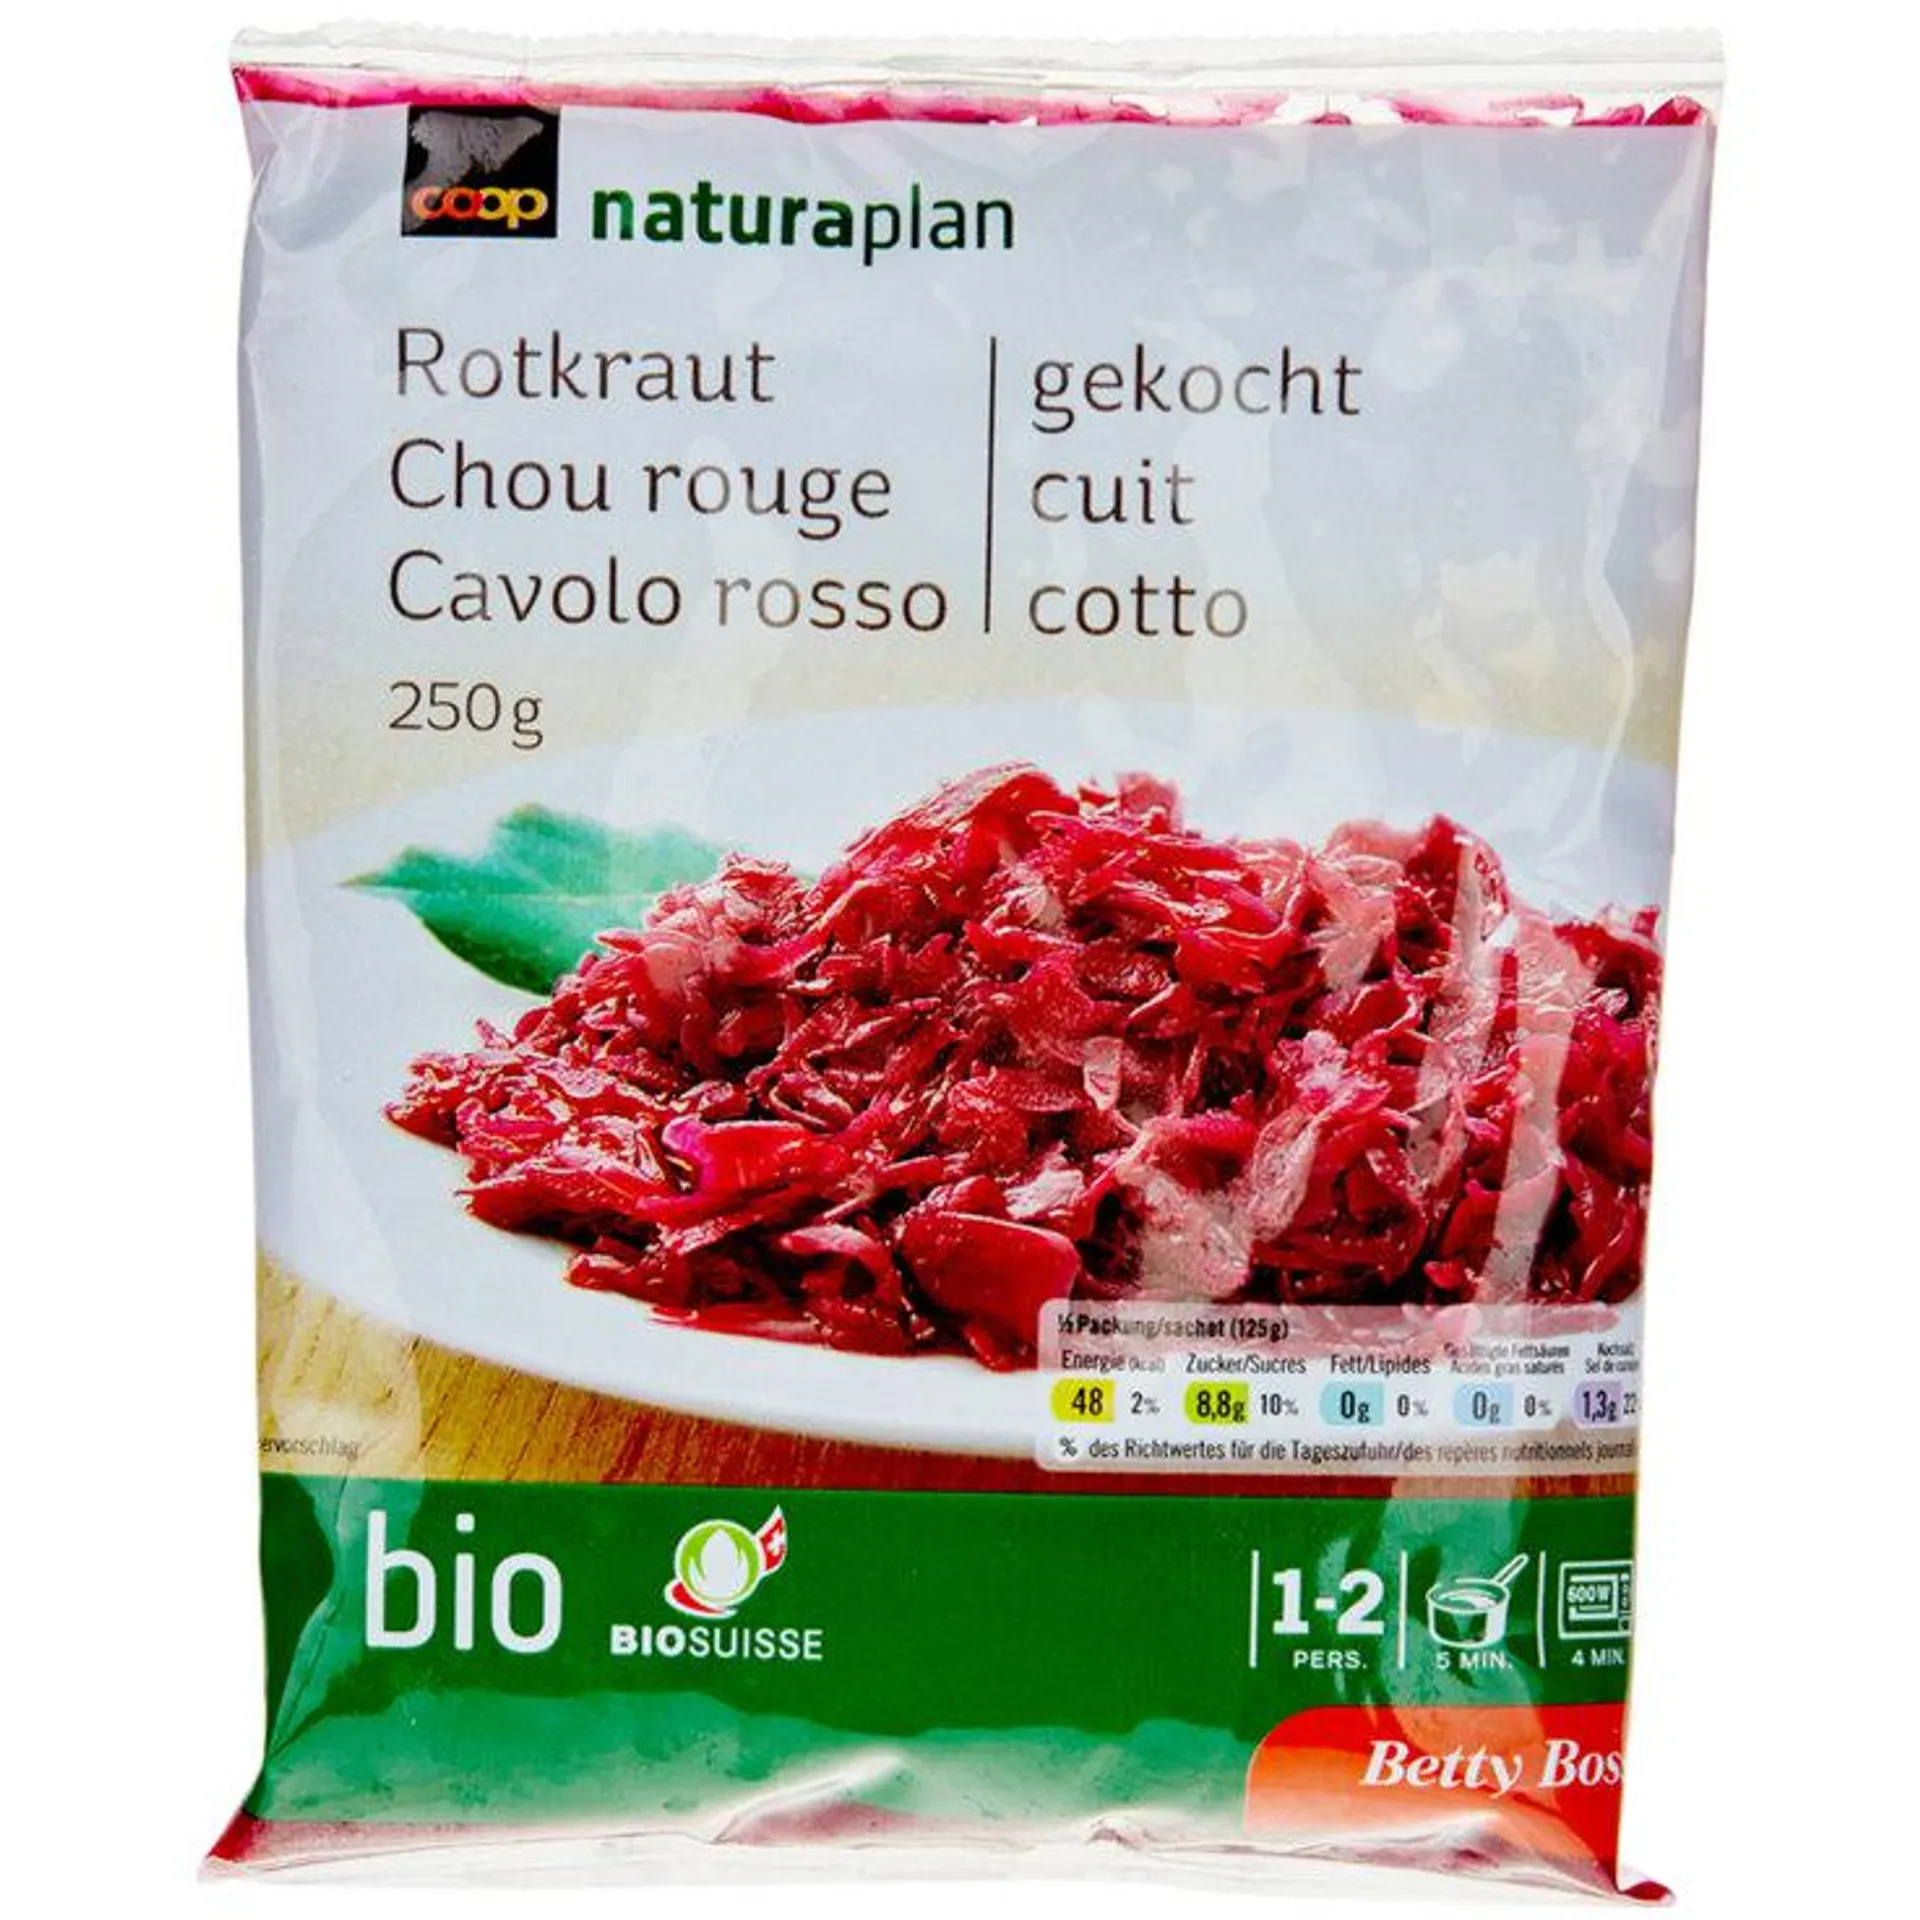 Betty Bossi Naturaplan Bio Rotkraut gekocht